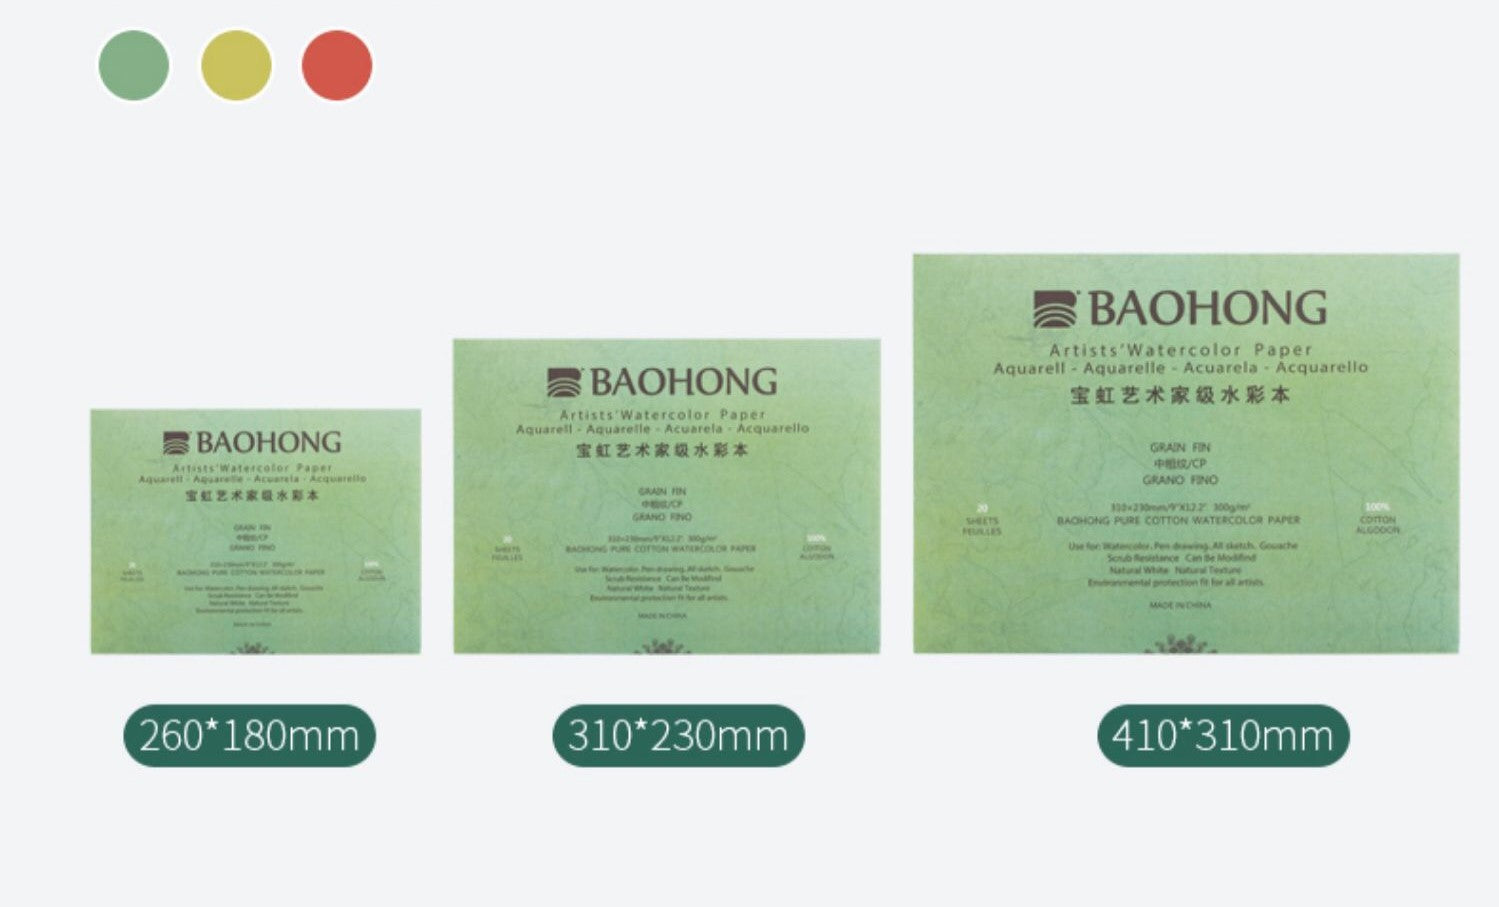 BAOHONG Artists‘ Watercolor Paper 100% Cotton, 140lb/300gsm, Watercolor  Block, 20 sheets